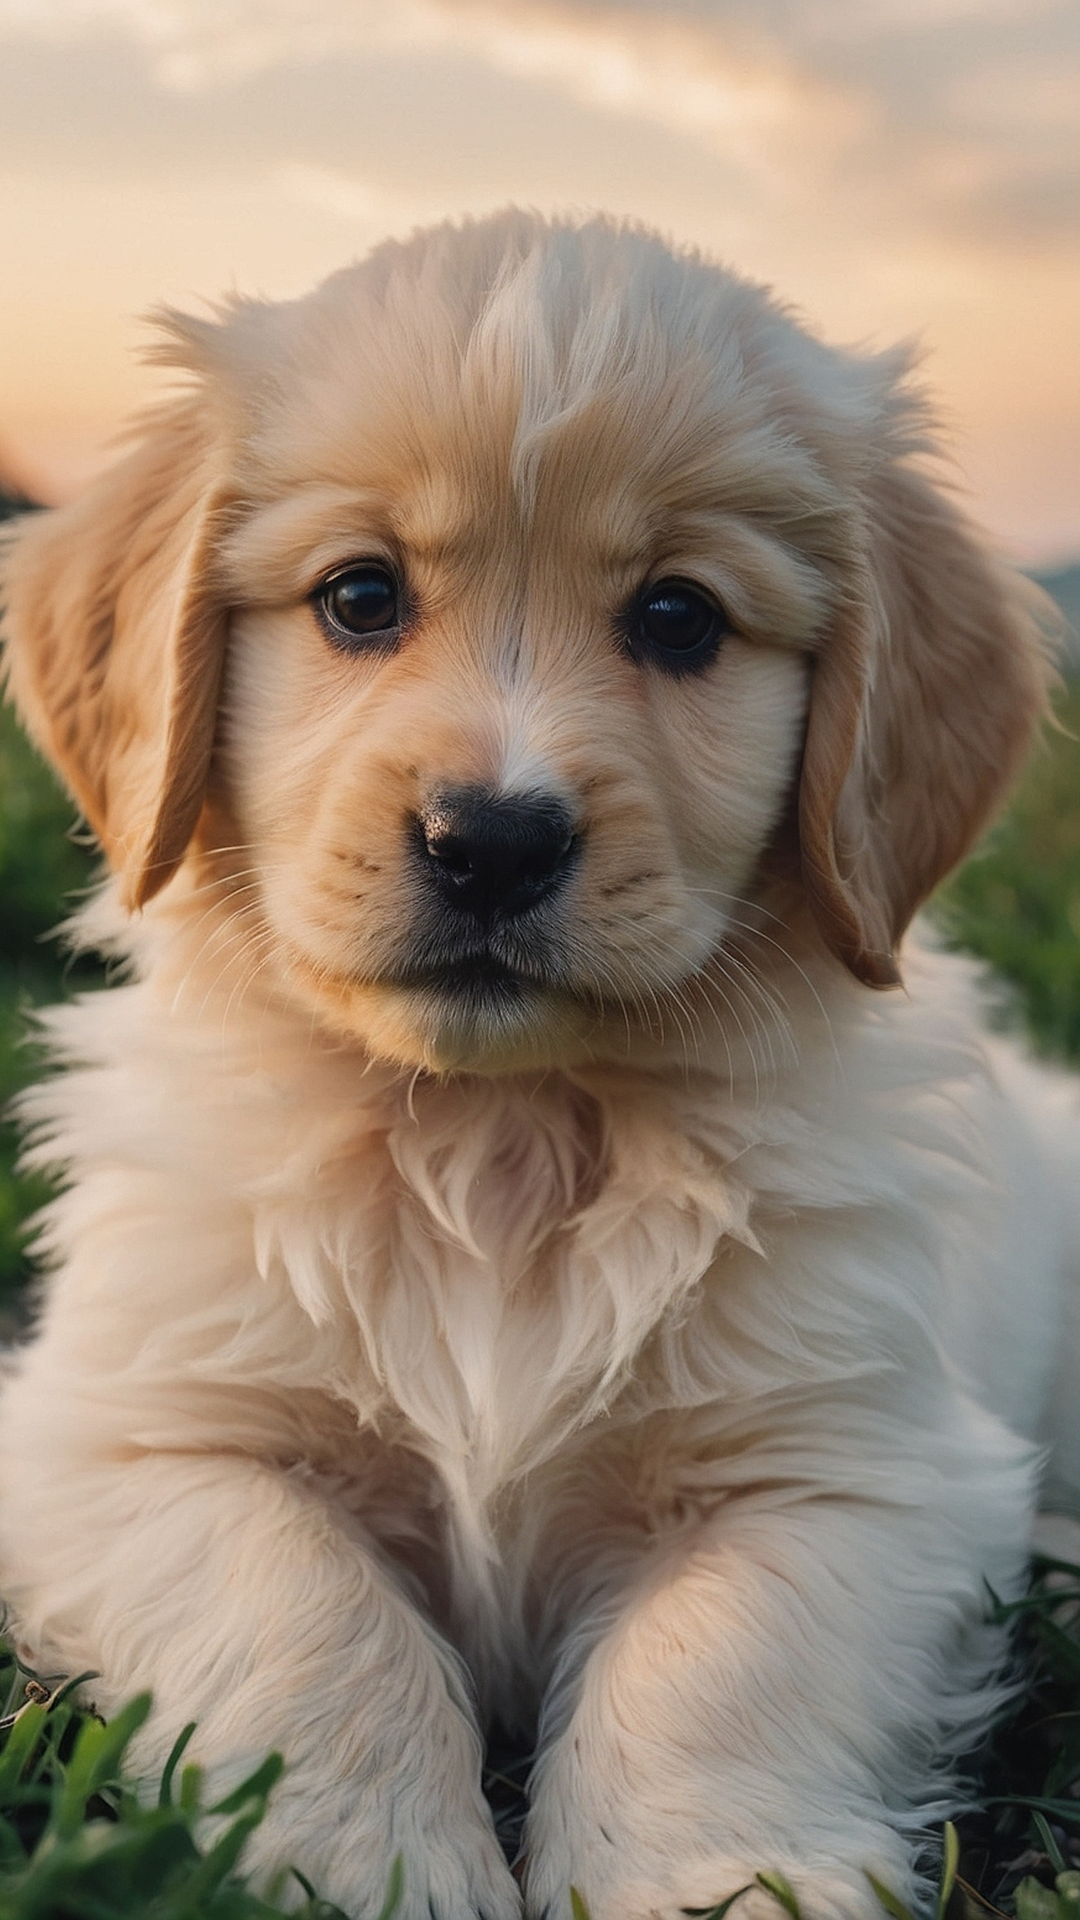 Cuddlebugs: Snuggly Scenes of Cute Puppy Love